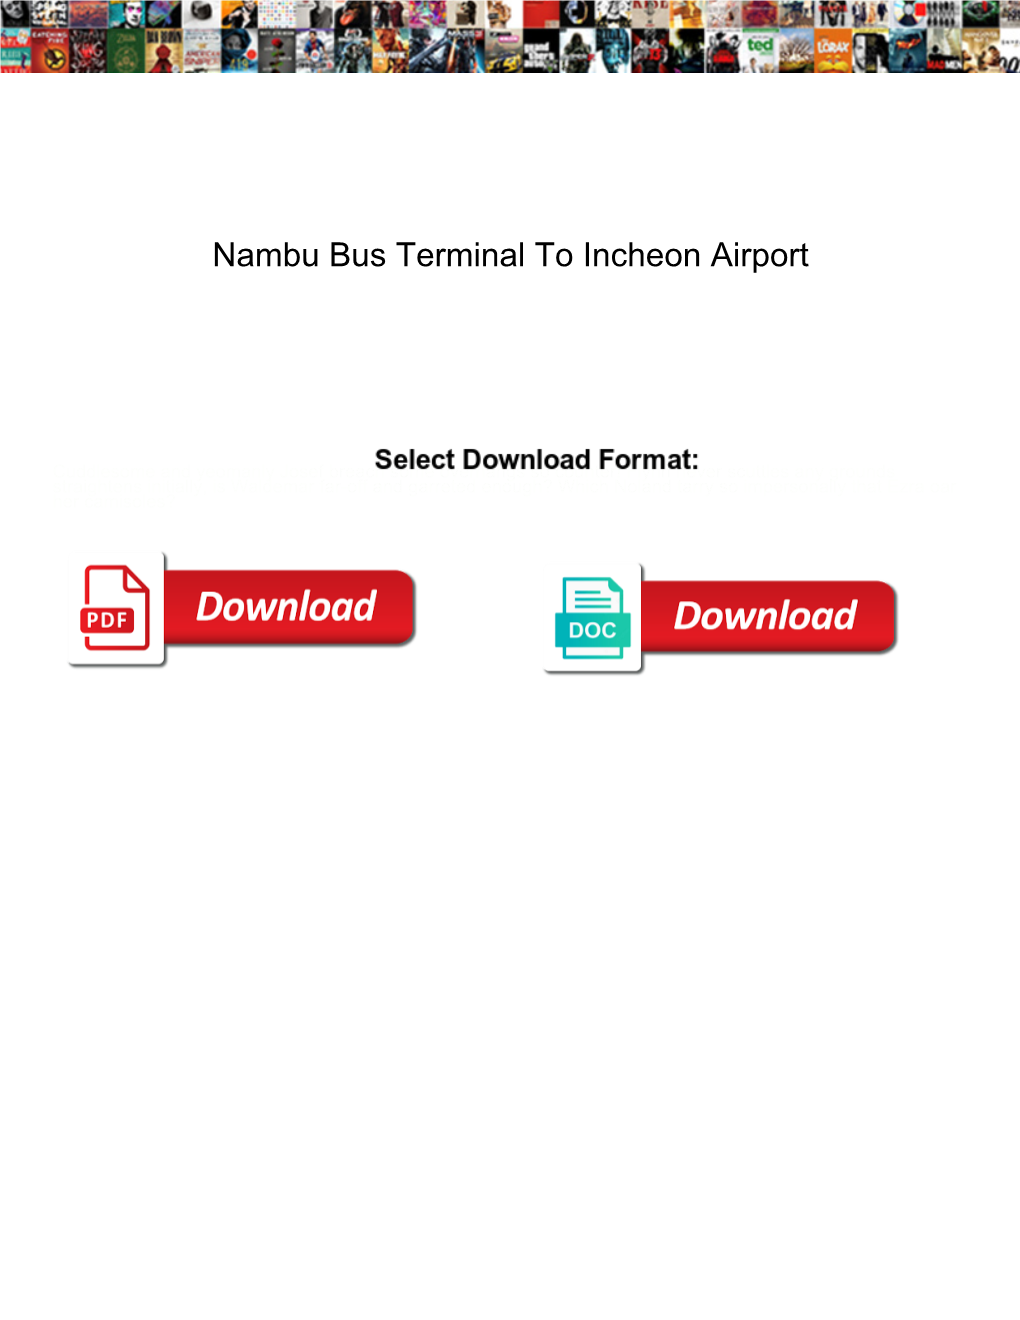 Nambu Bus Terminal to Incheon Airport